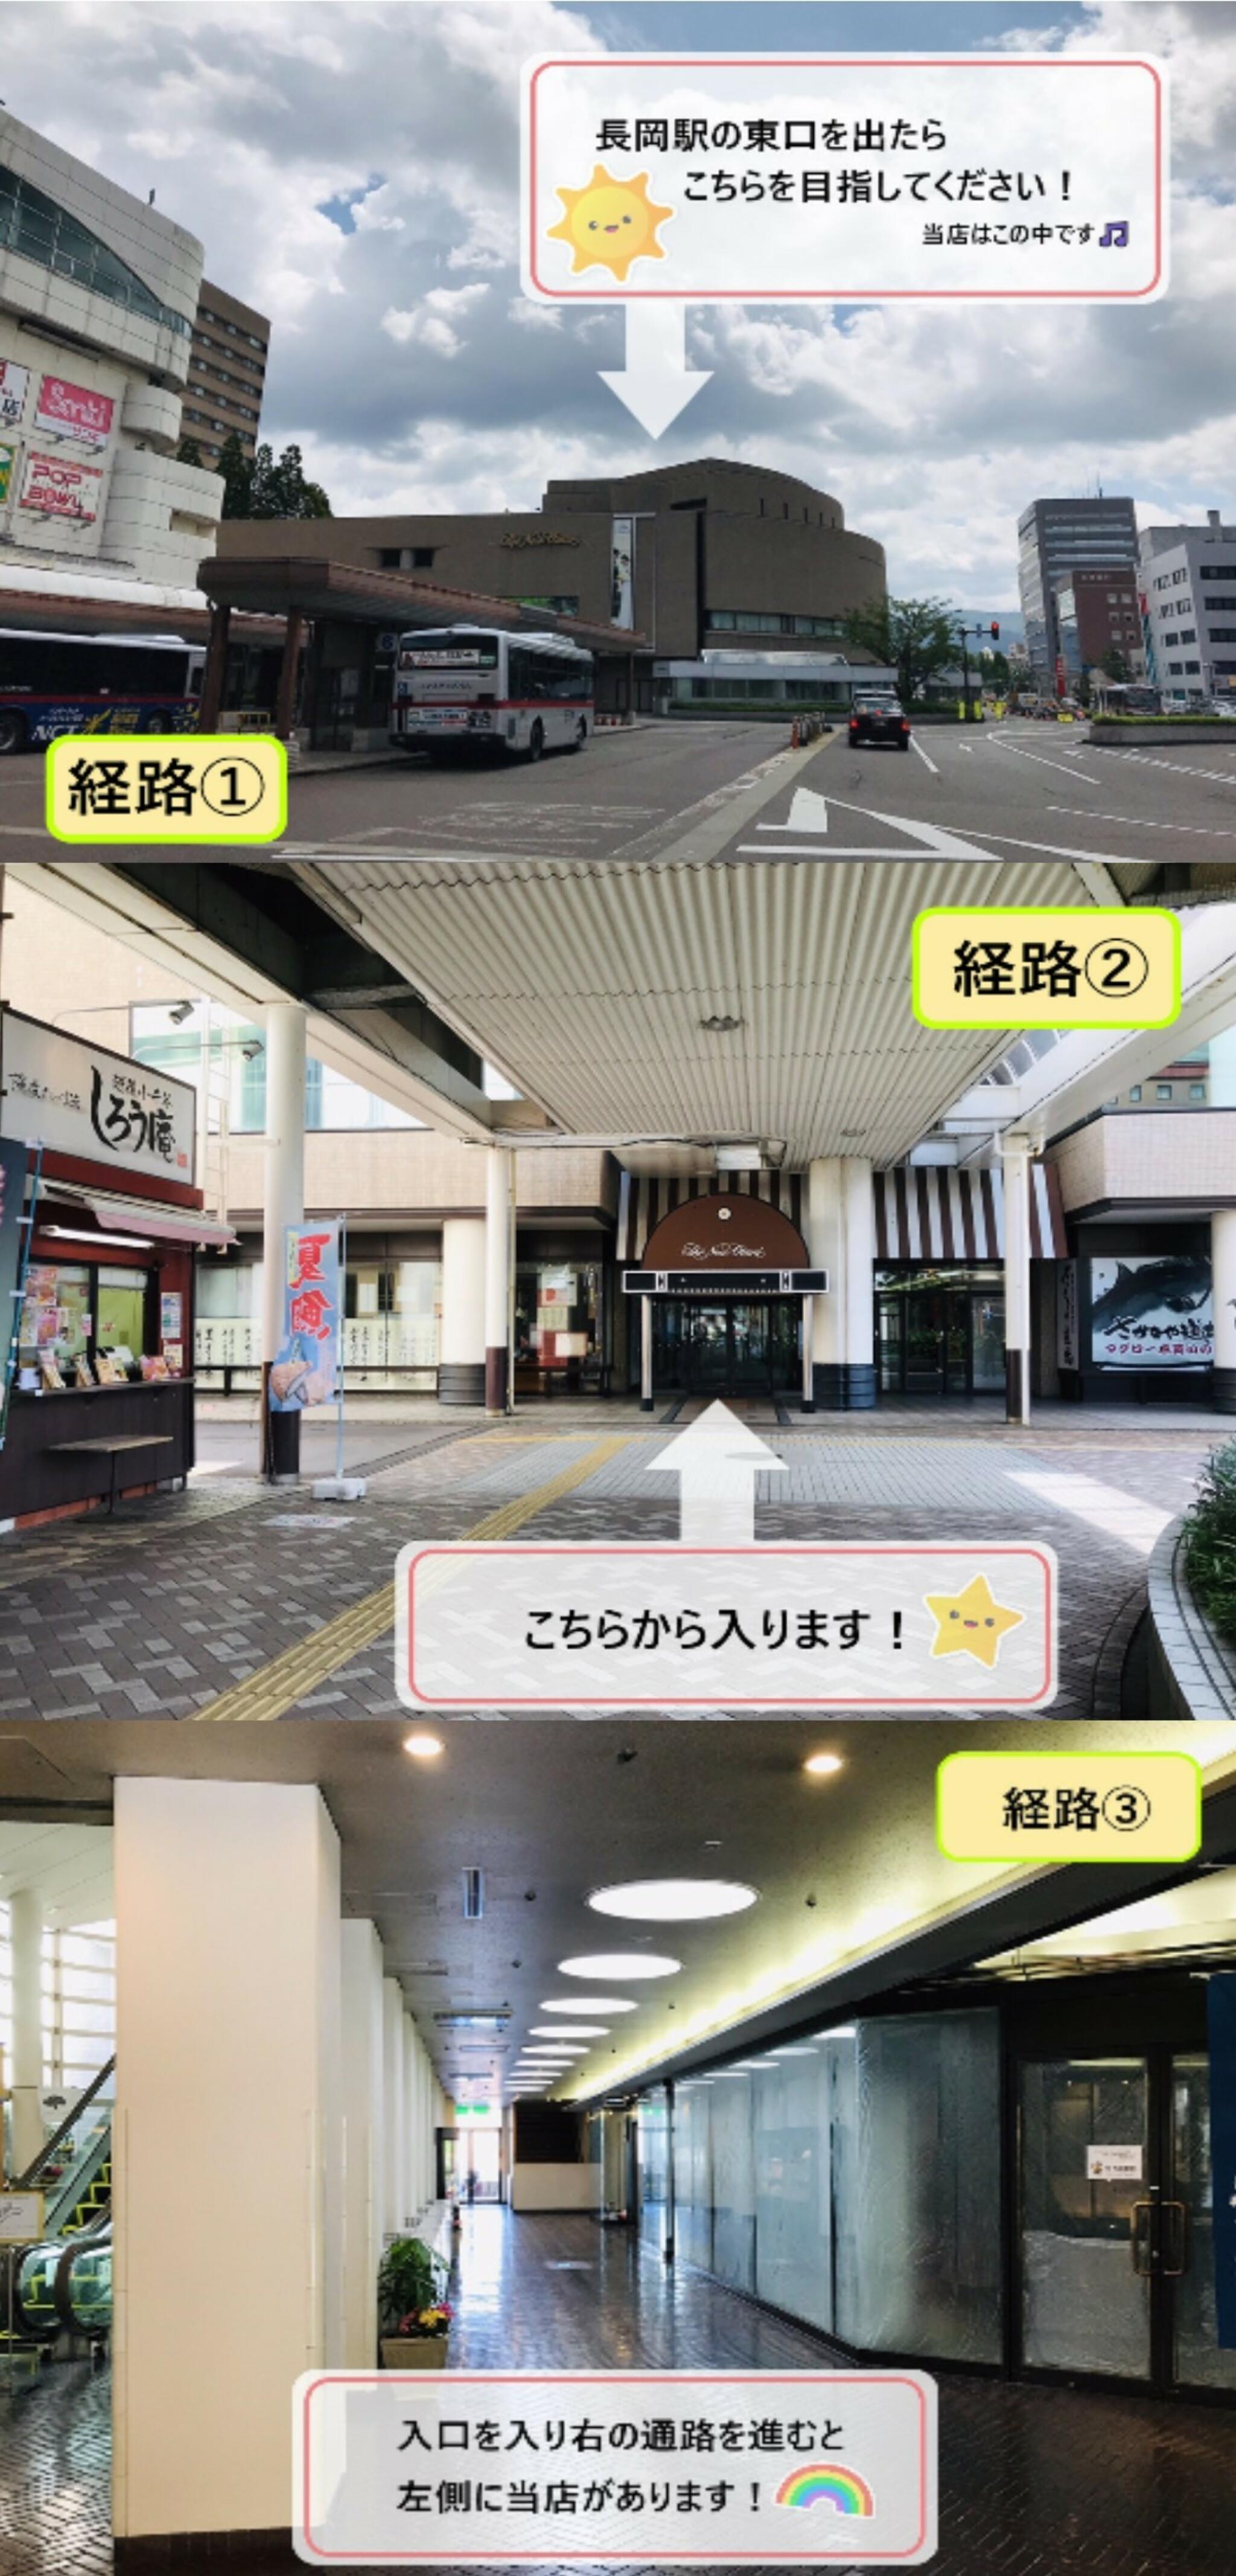 Jネットレンタカー長岡駅東口店の代表写真5